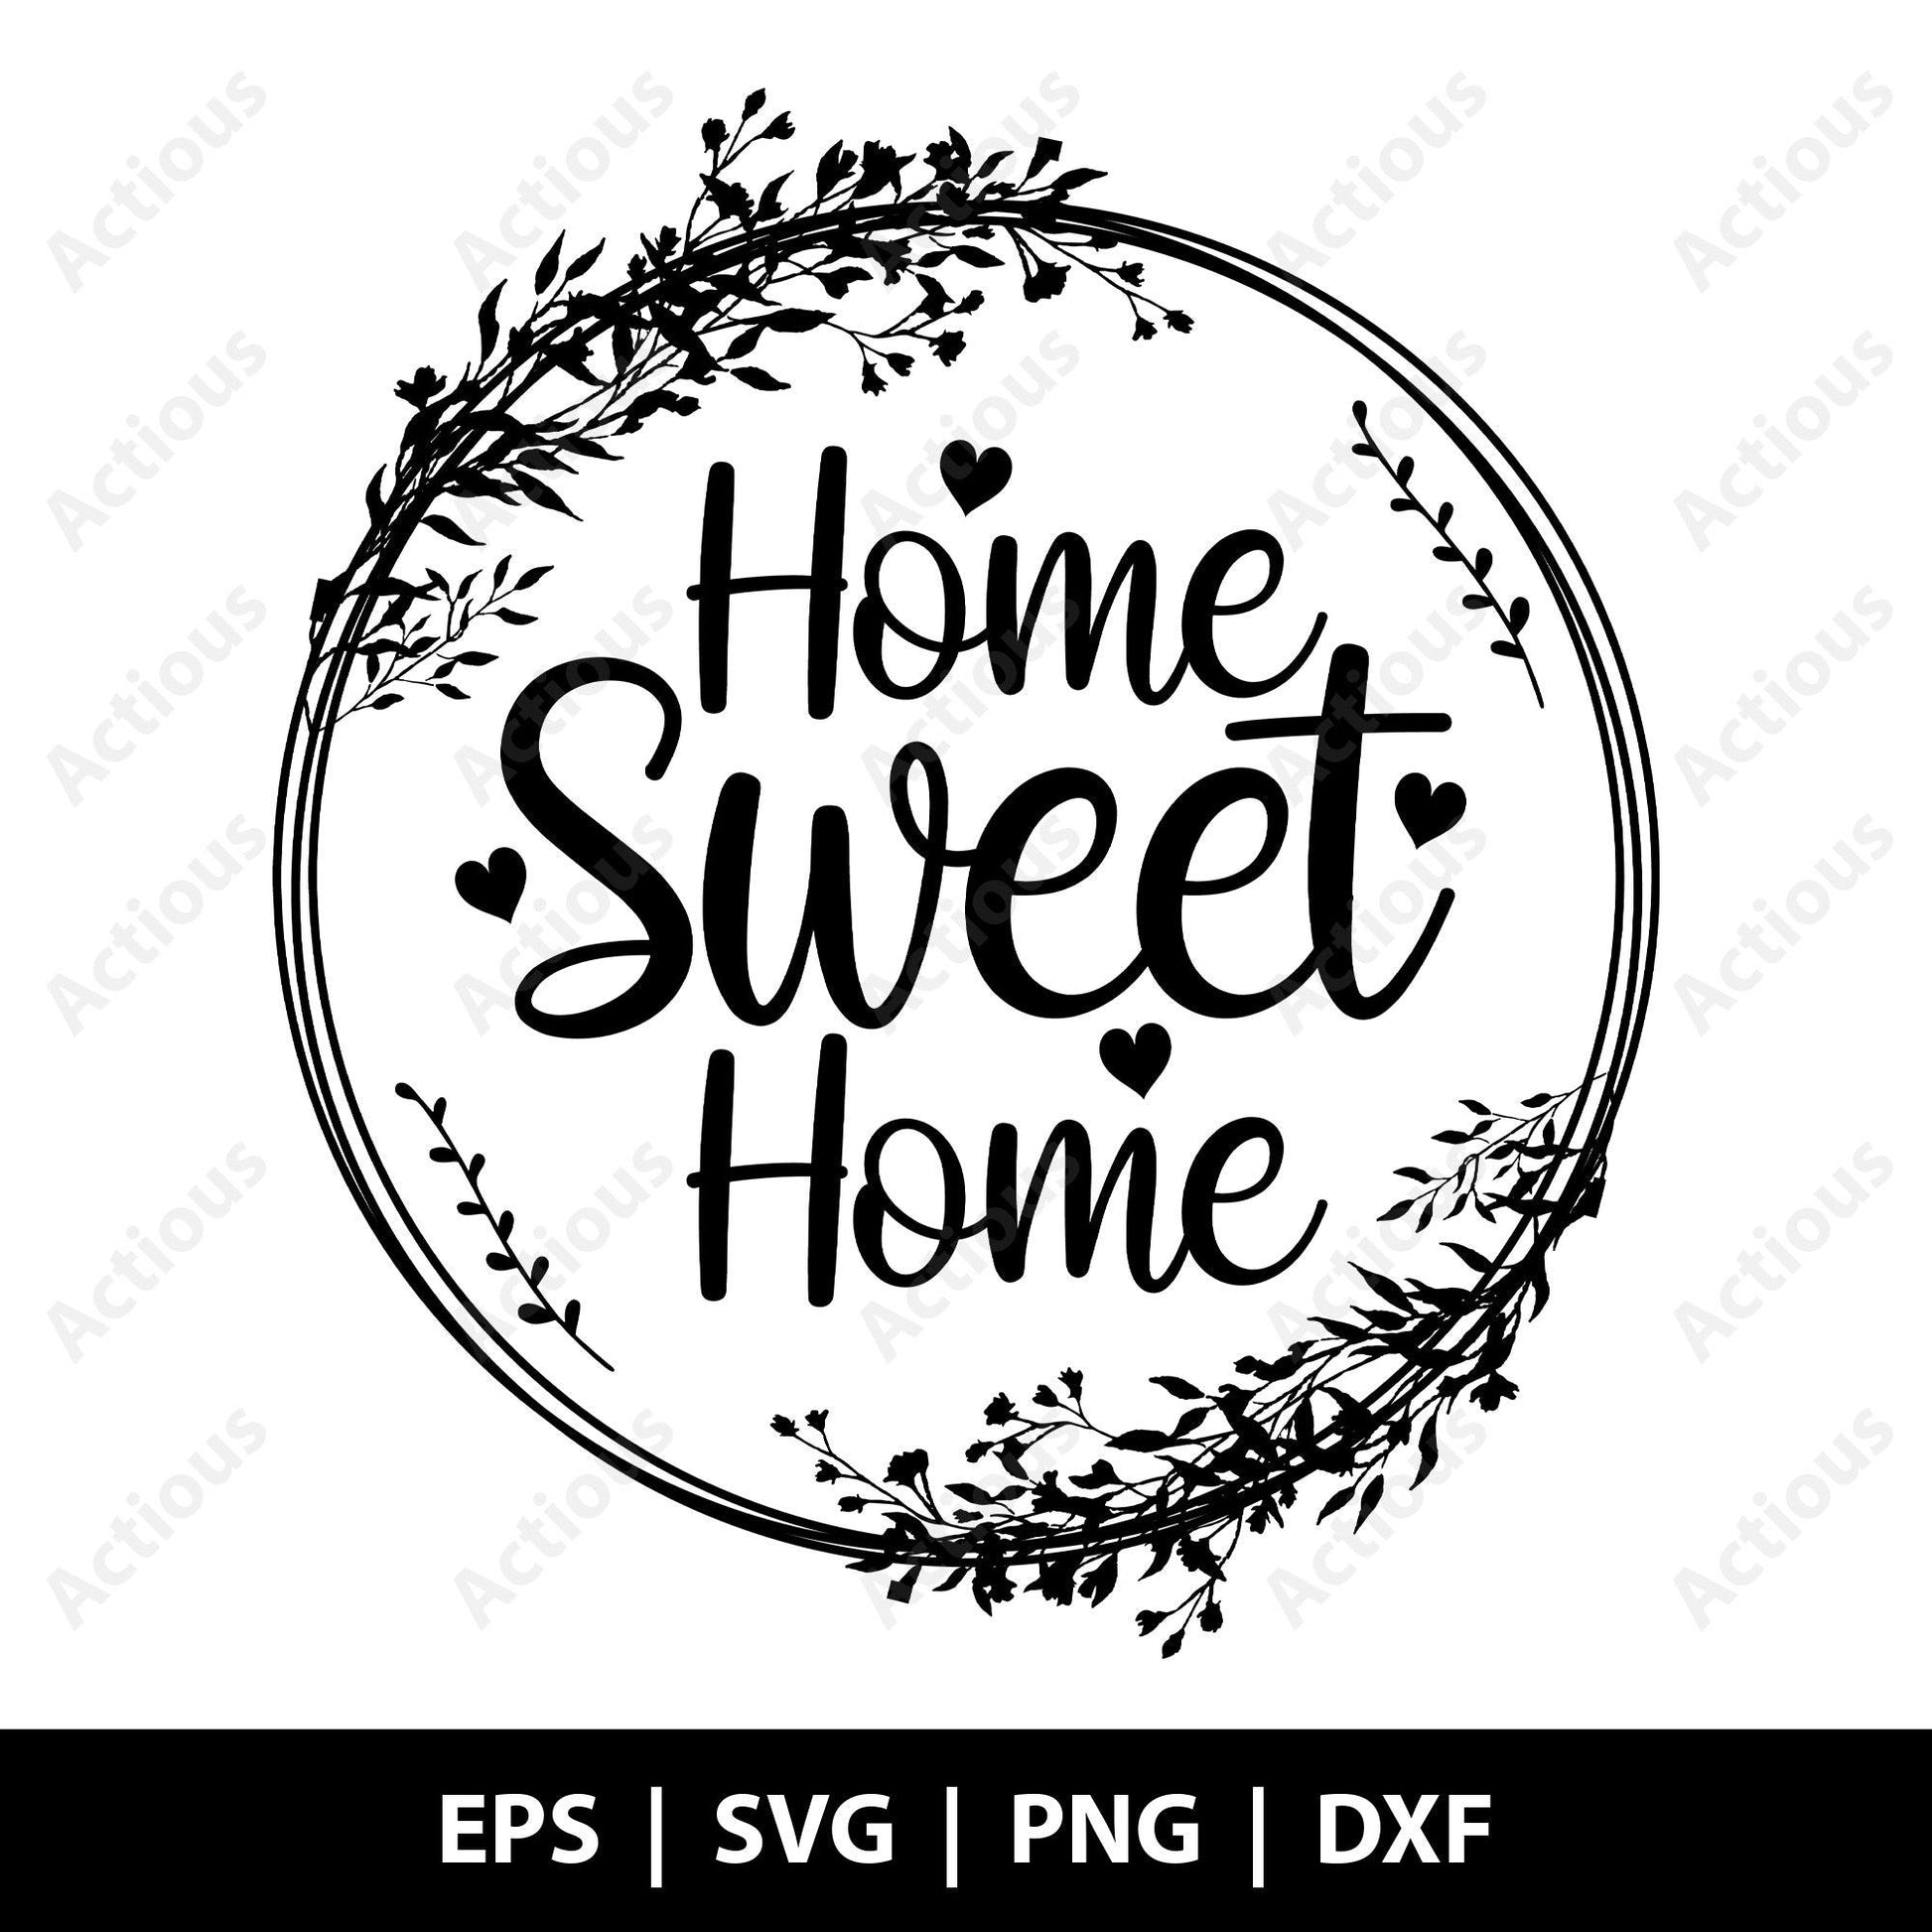 Home sweet home Svg, Wall decor, Wall art svg, Digital file for Cut file, Cricut & Silhouette